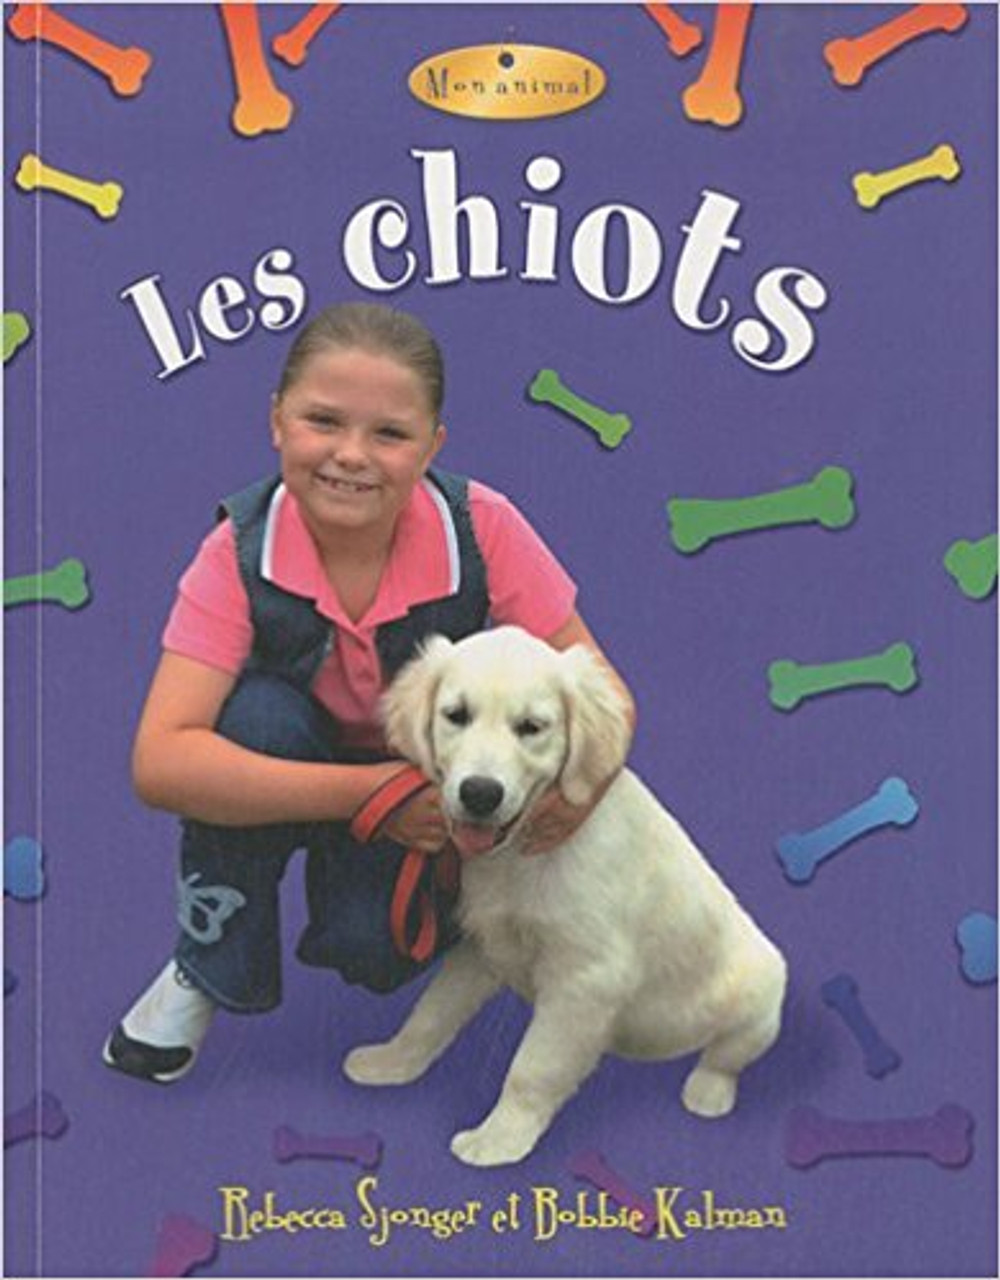 Les Chiots by Rebecca Sjonger